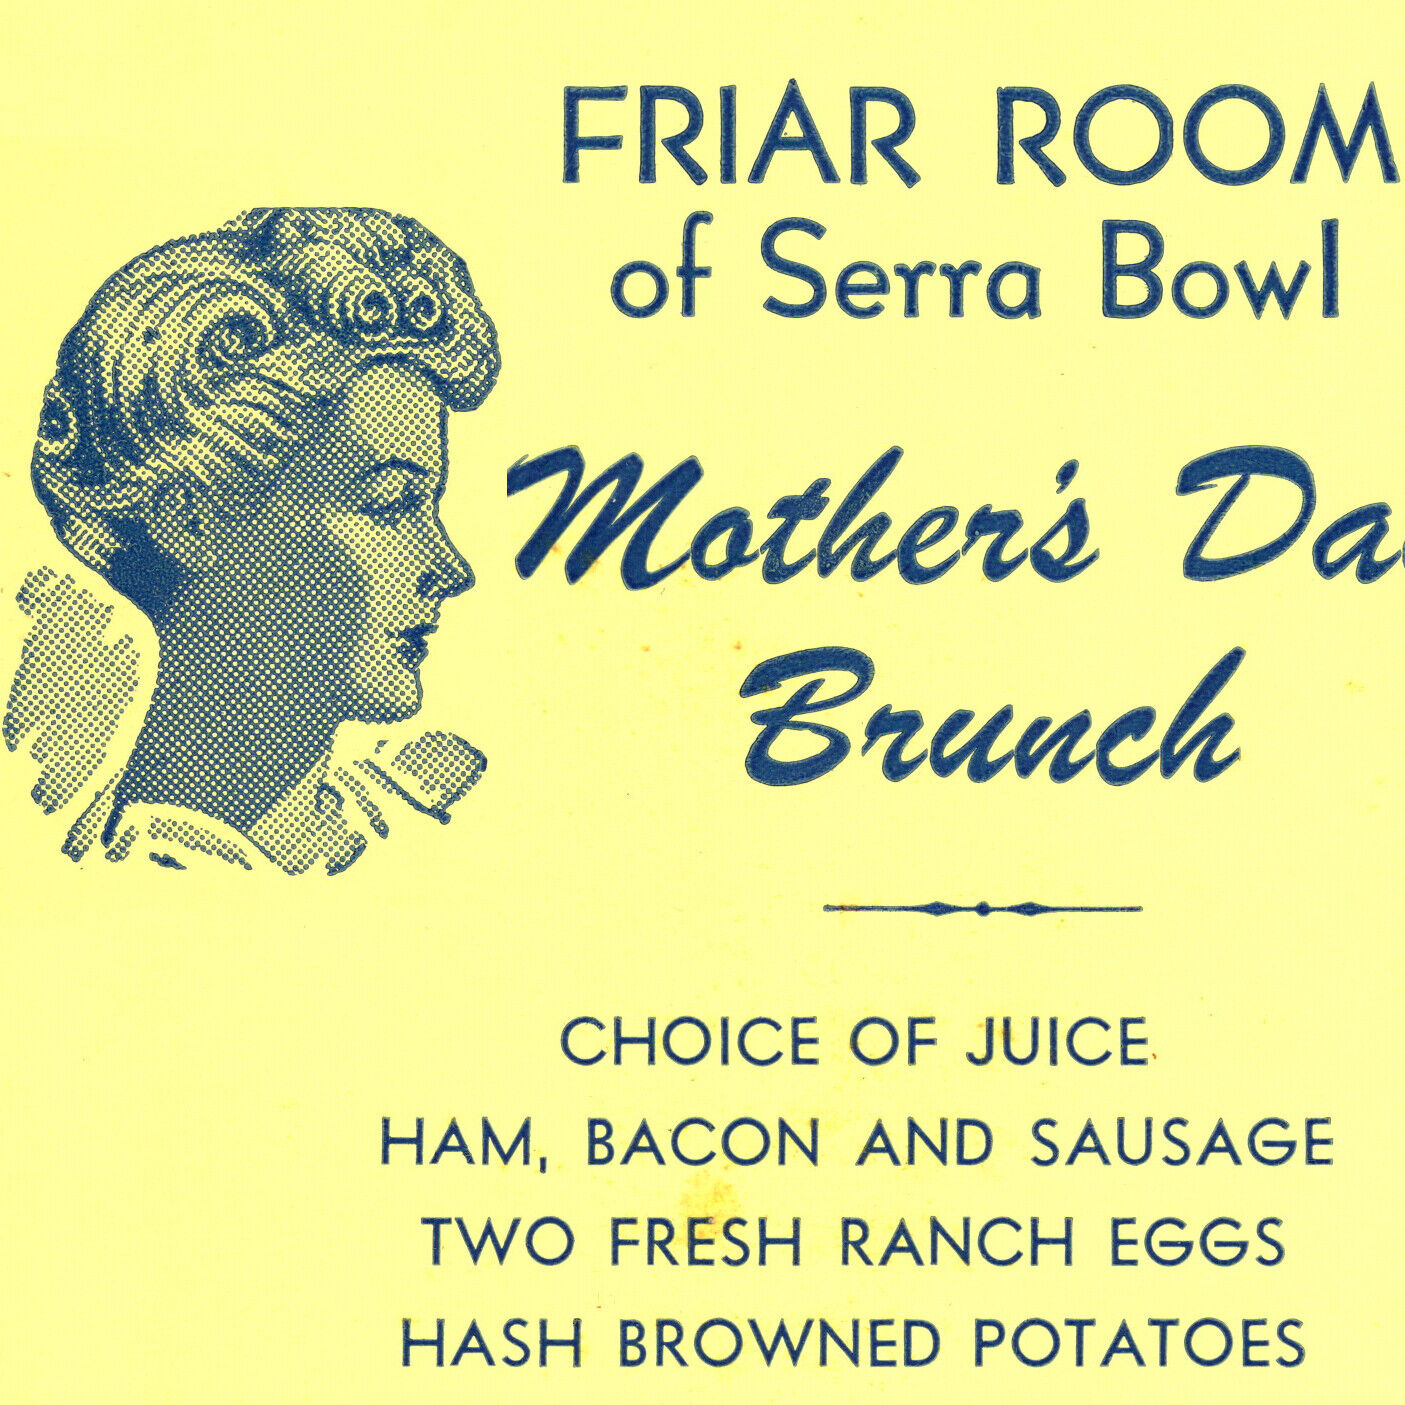 Vintage Friar Room Of Serra Bowl Mother's Day Brunch Daly City California